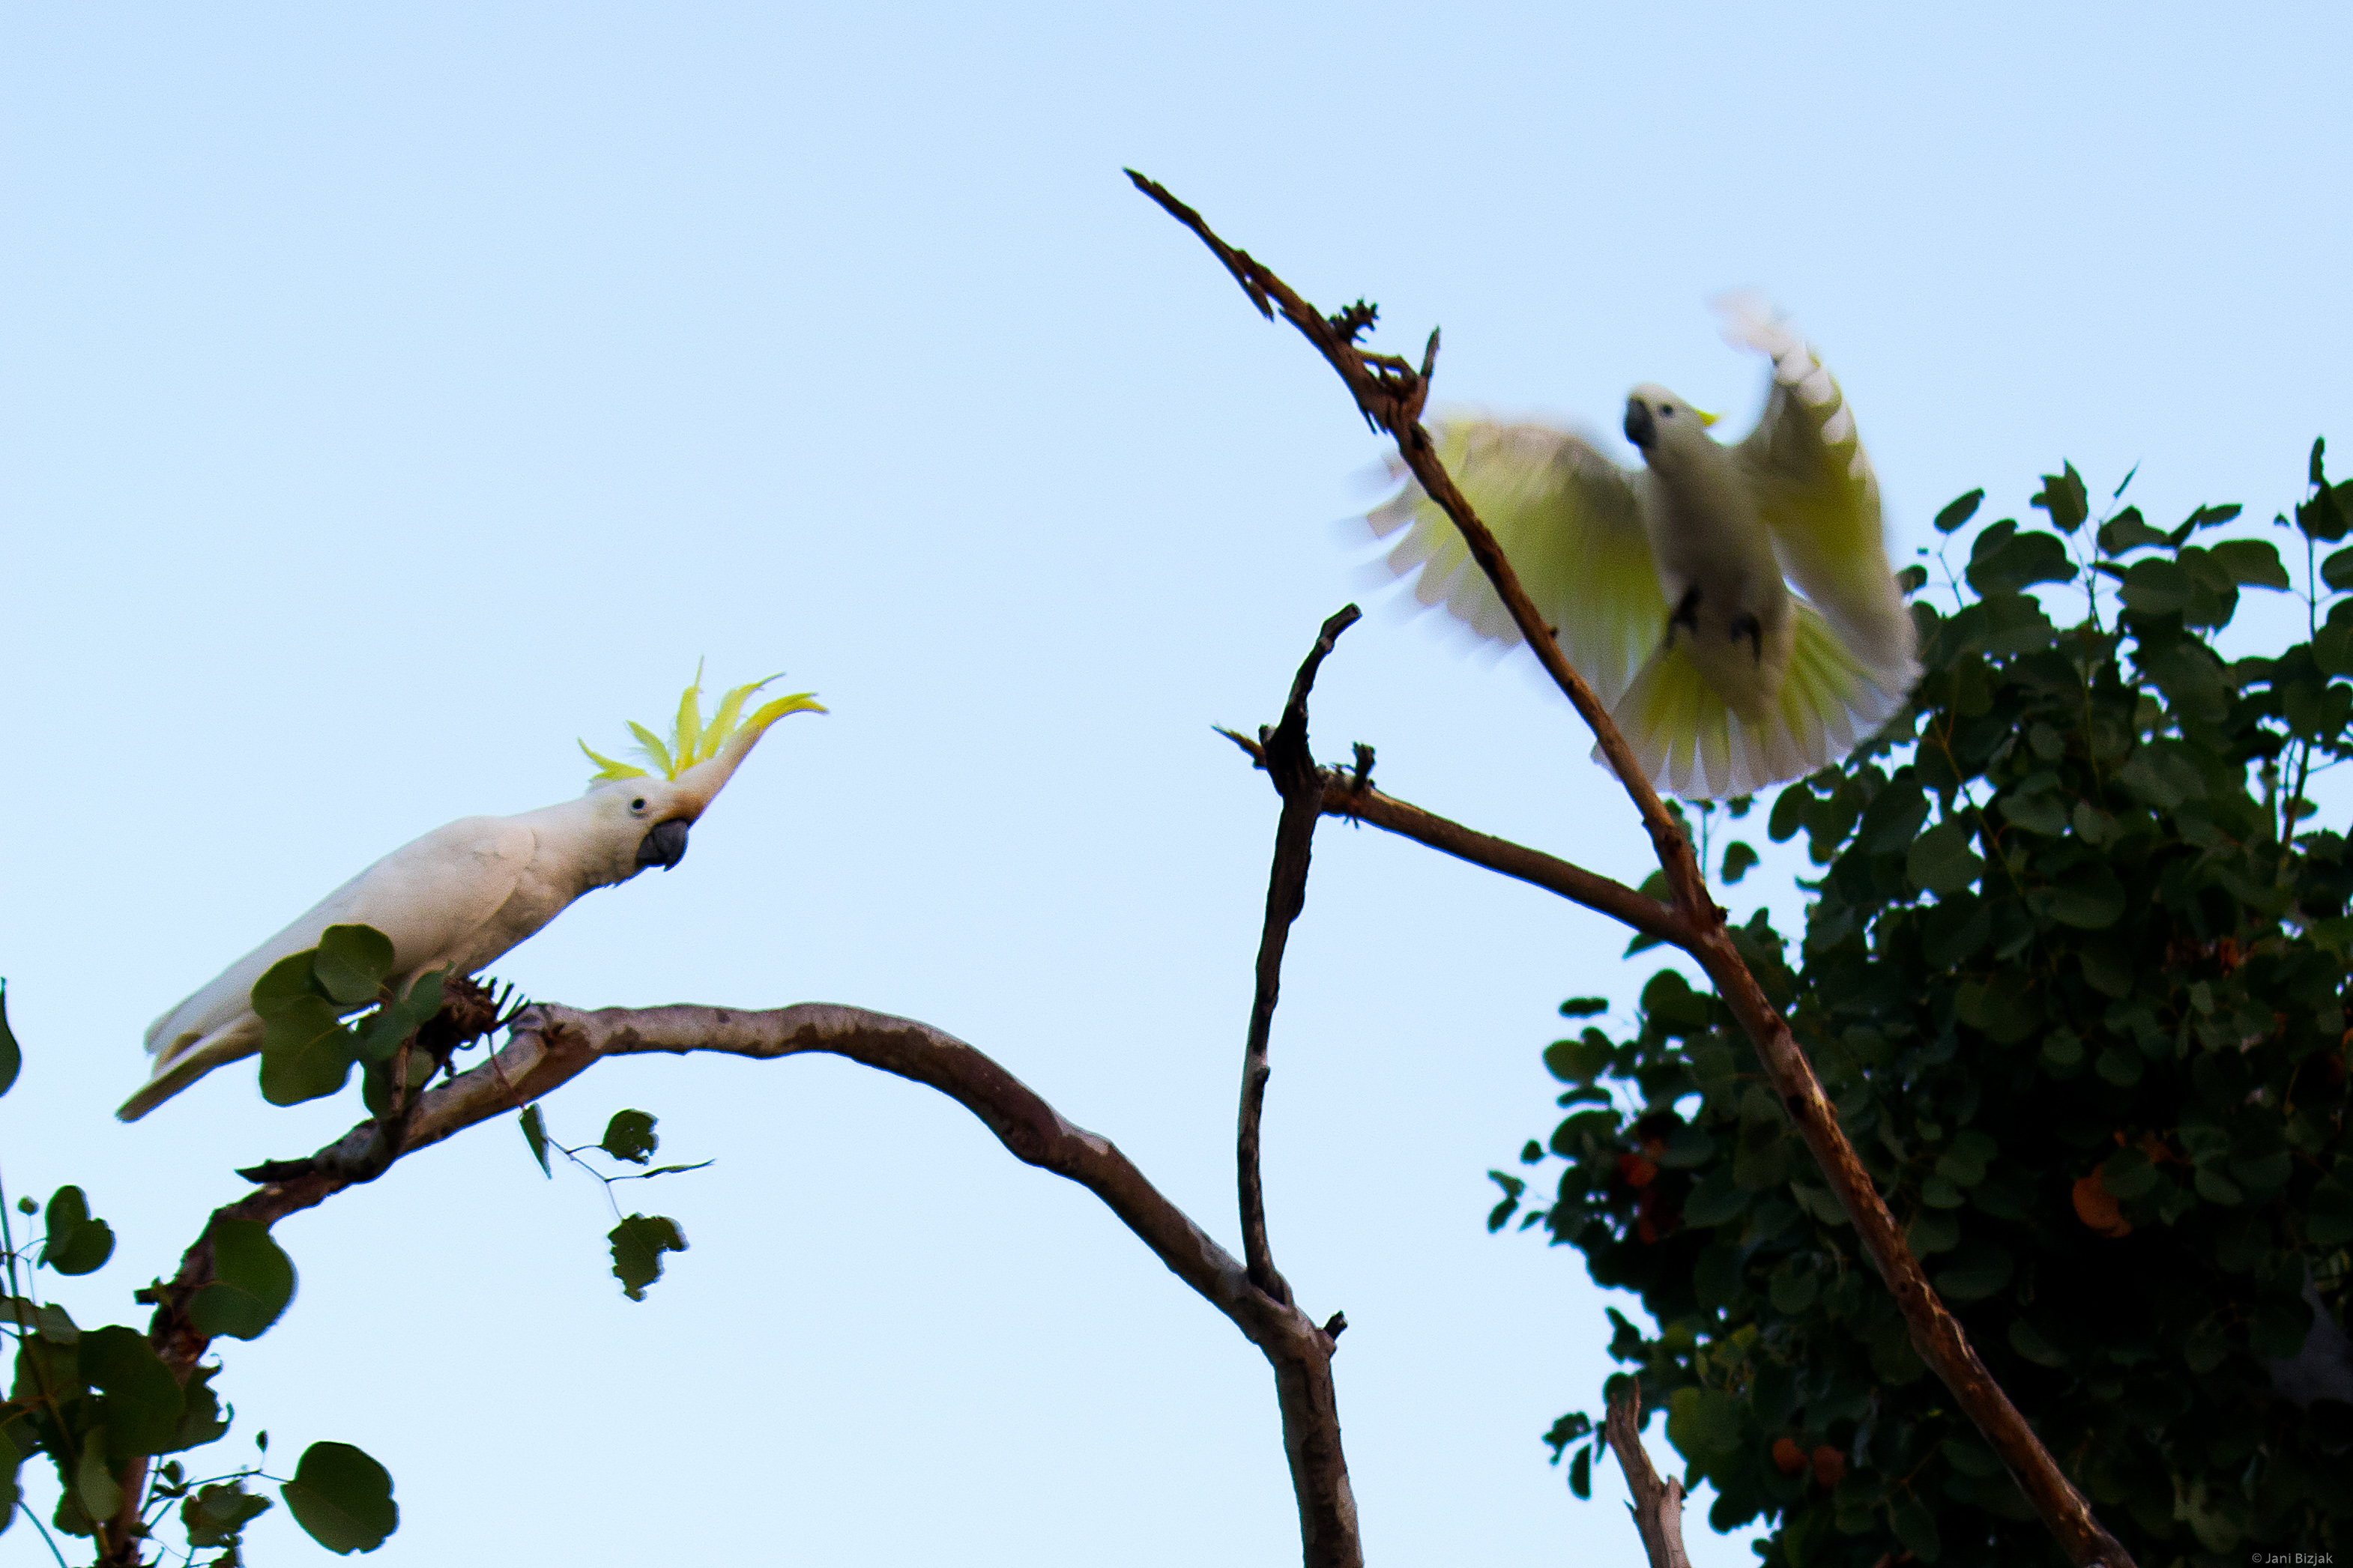 Cockatoos preparing to raid the parrot.